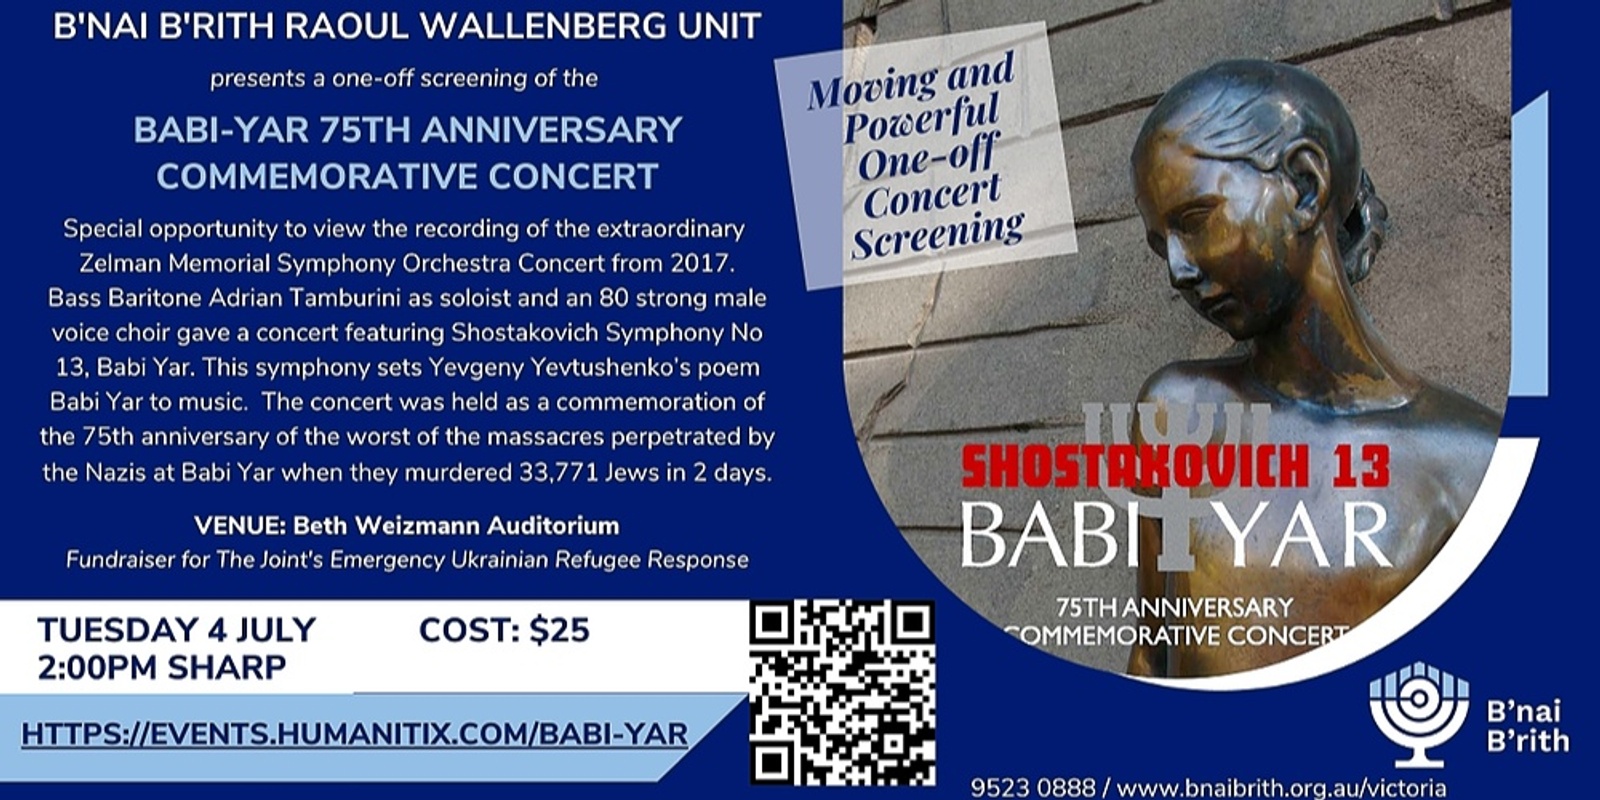 Babi Yar Commemorative Concert Screening